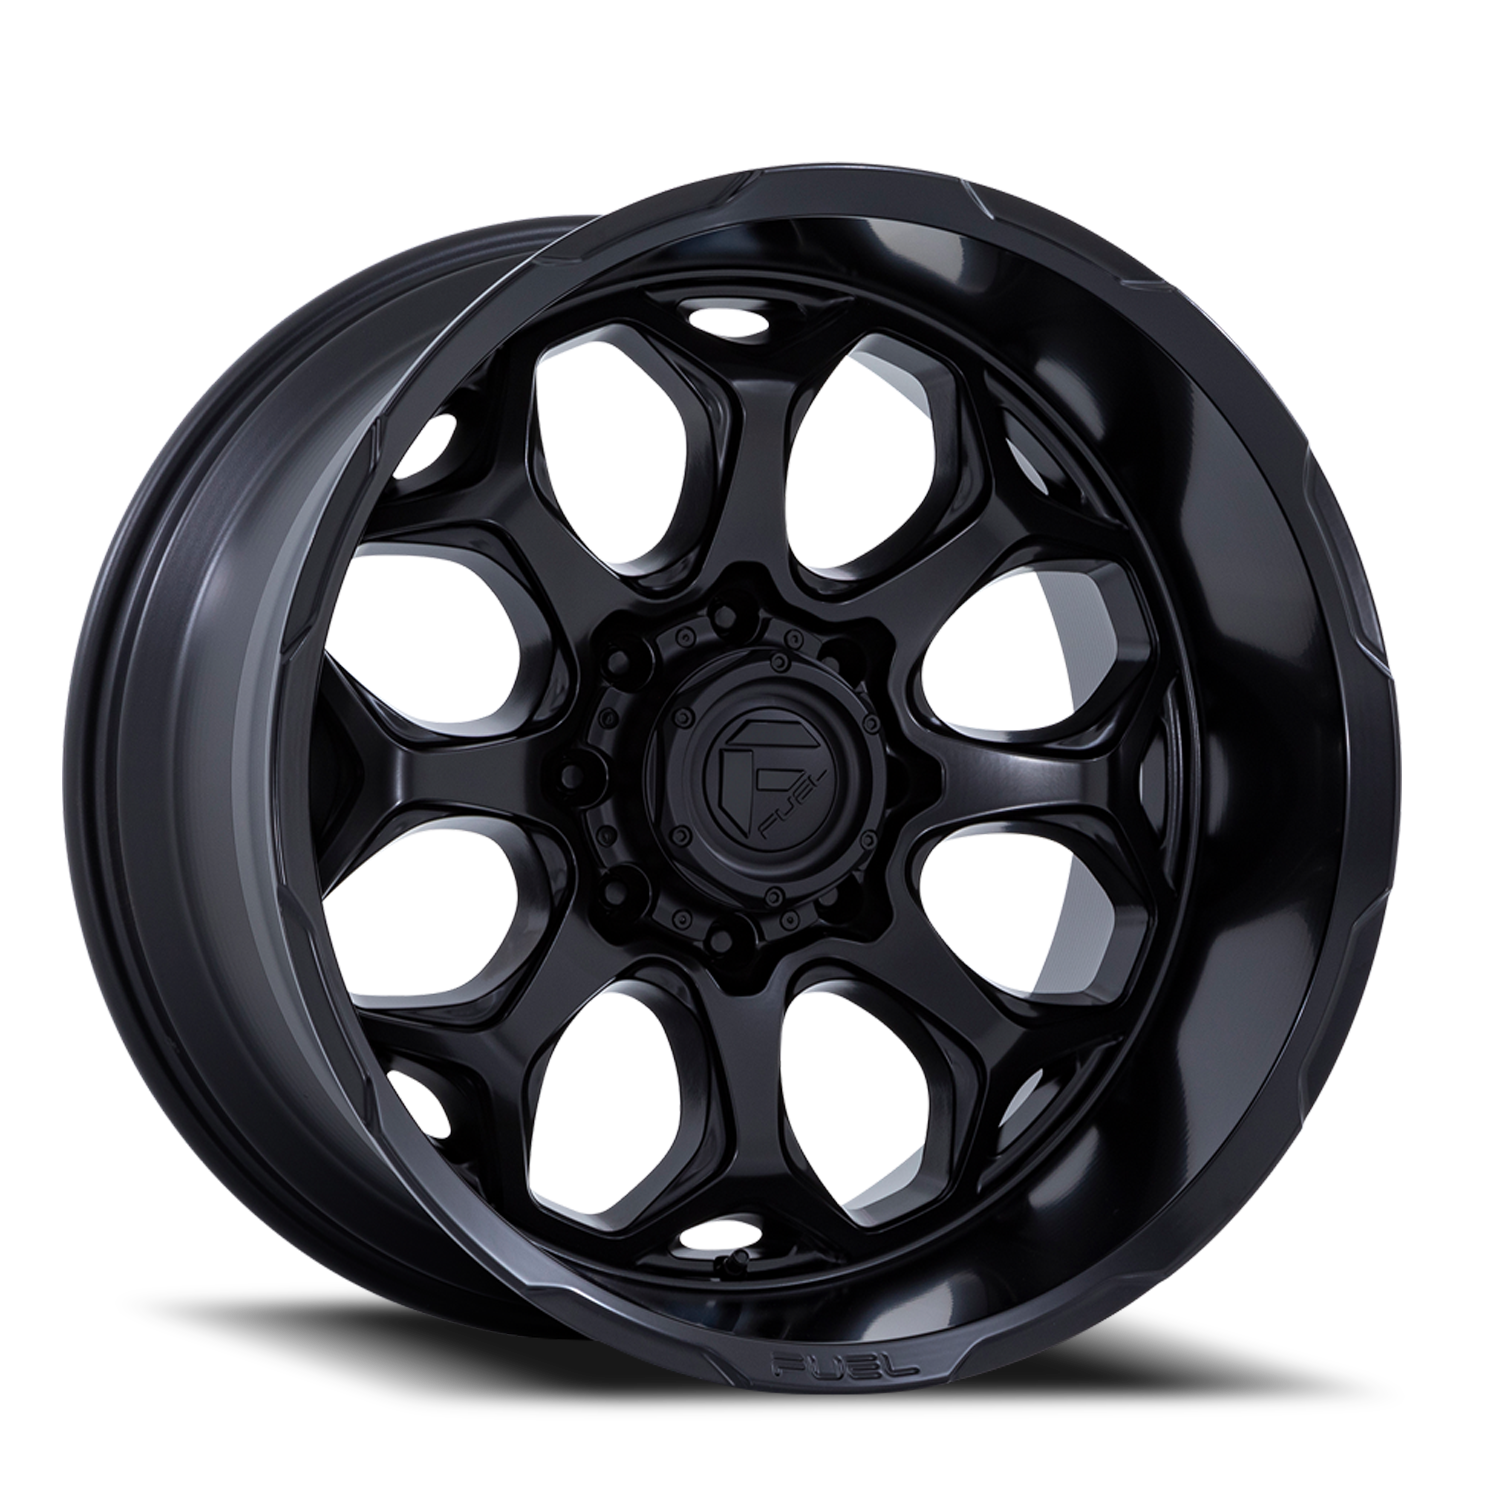 Aluminum Wheels 20X9 Scepter FC862 MX 6 On 139.7 Blackout 106.1 Bore 1 Offset Fuel Off Road Wheels